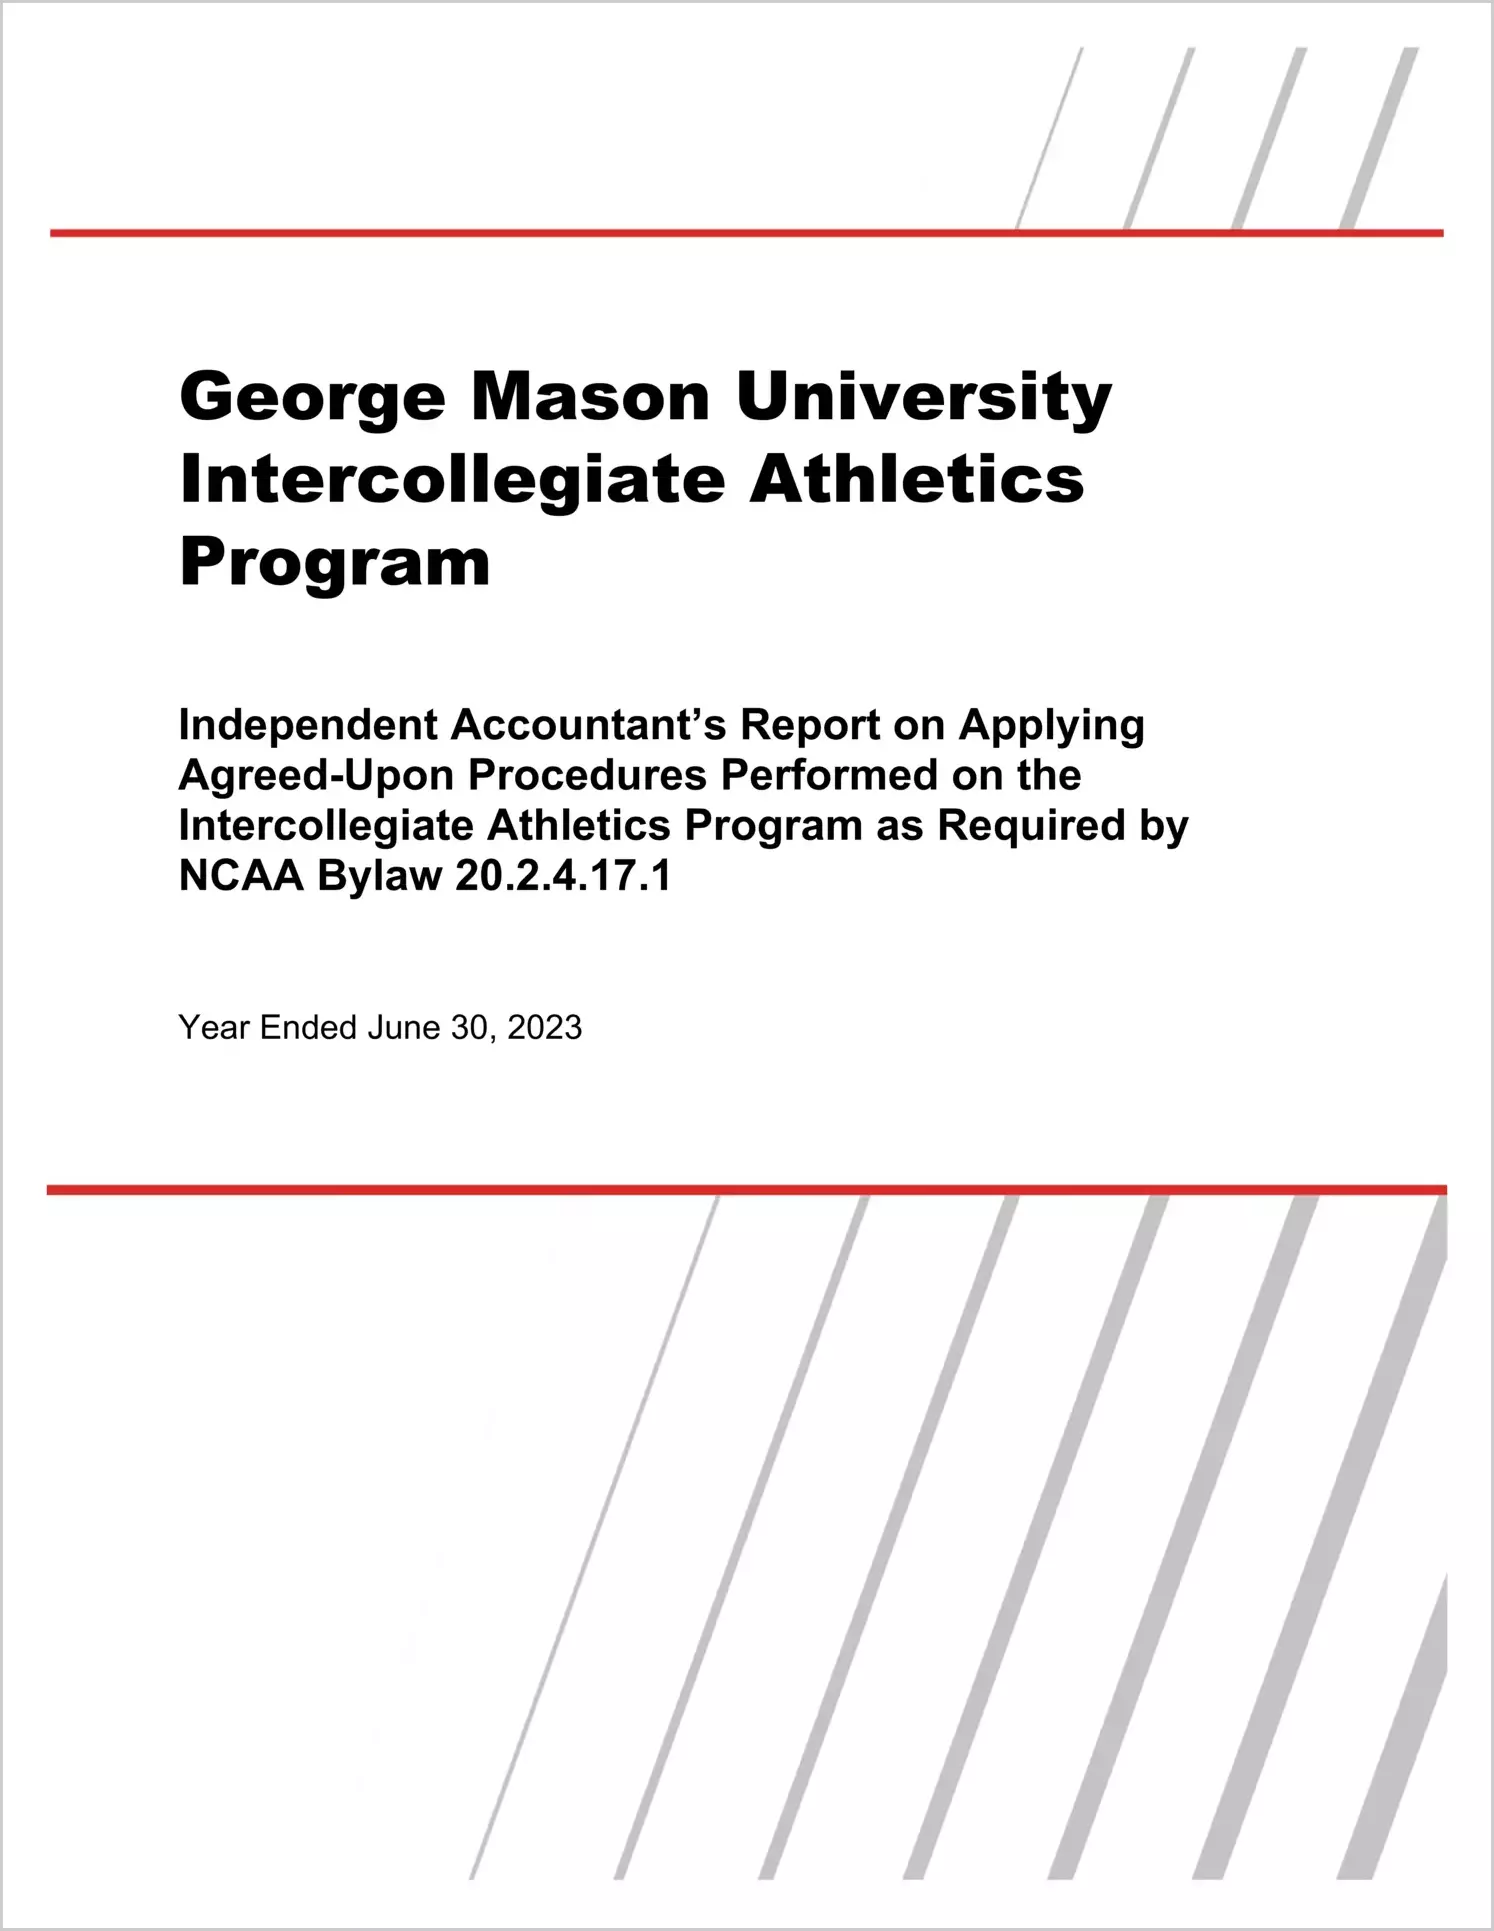 George Mason University Intercollegiate Athletics Programs for the year ended June 30, 2023